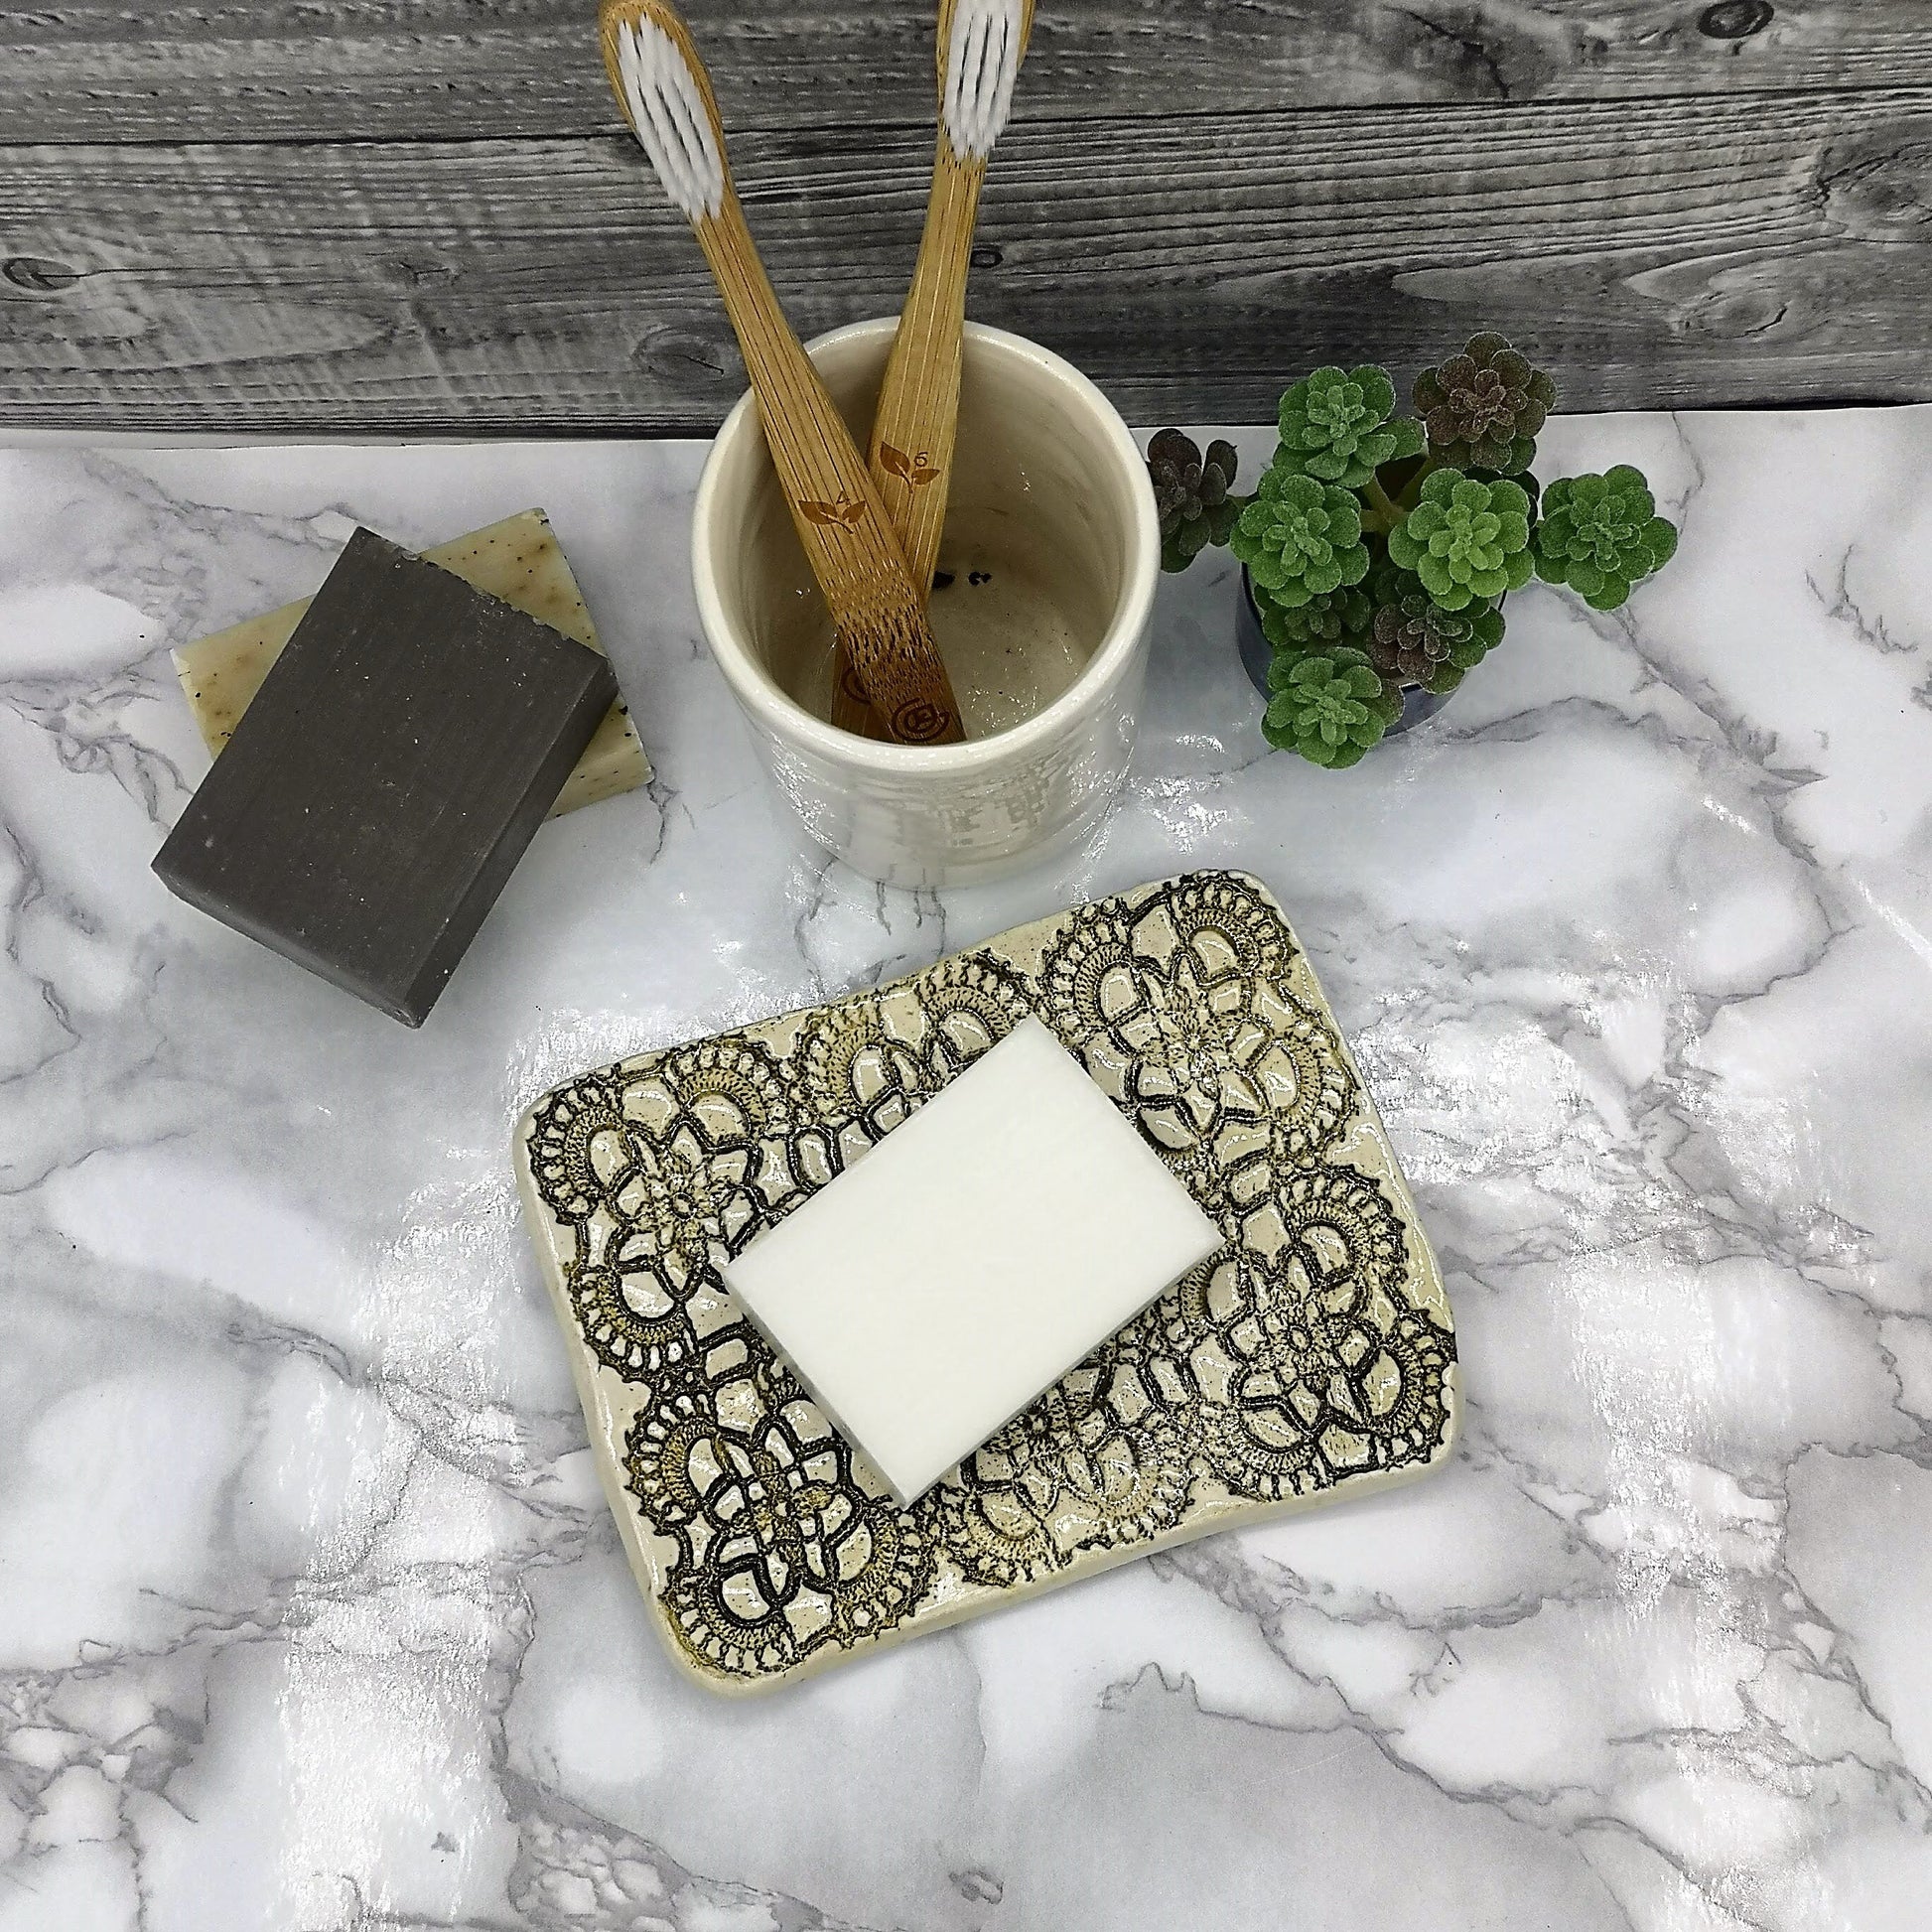 DISH SOAP DISPENSER, Handmade Ceramic Soap Dish With Drain, Bathroom Accessories, Soap Bar Holder - Ceramica Ana Rafael